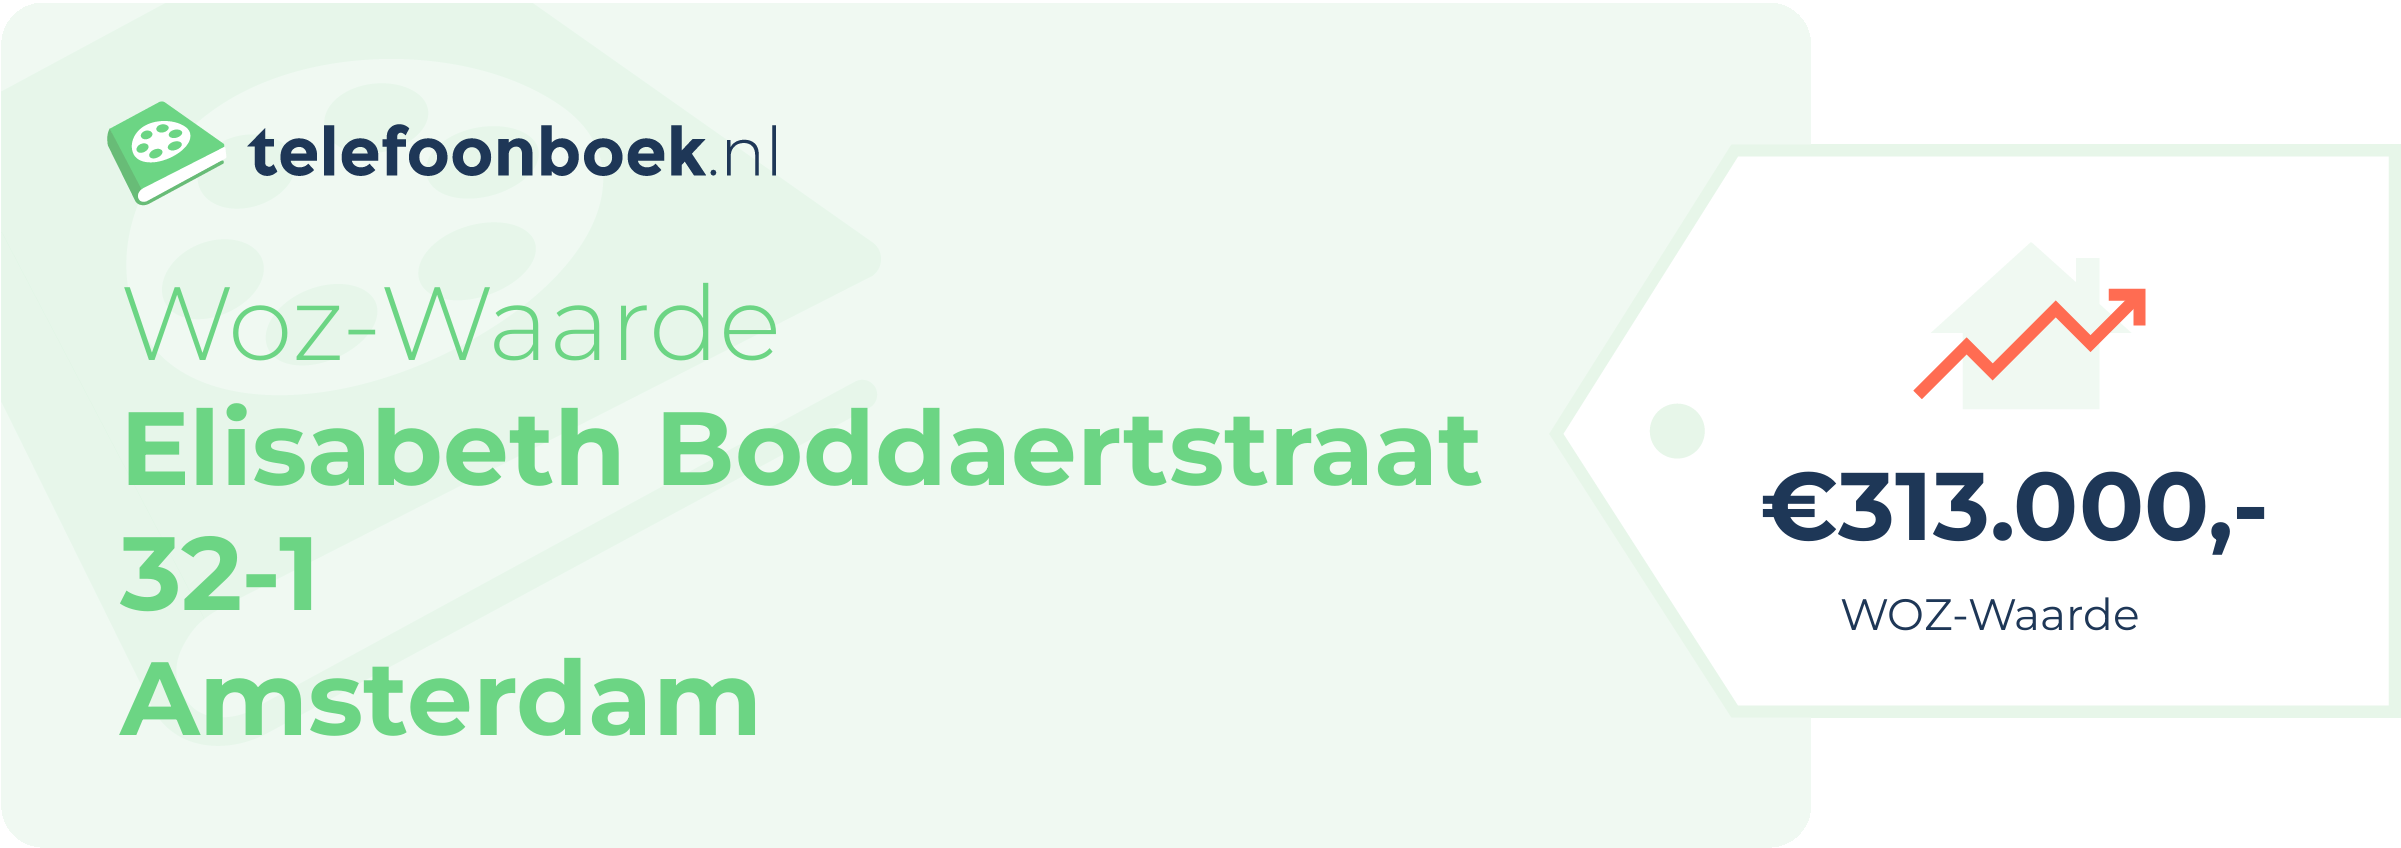 WOZ-waarde Elisabeth Boddaertstraat 32-1 Amsterdam